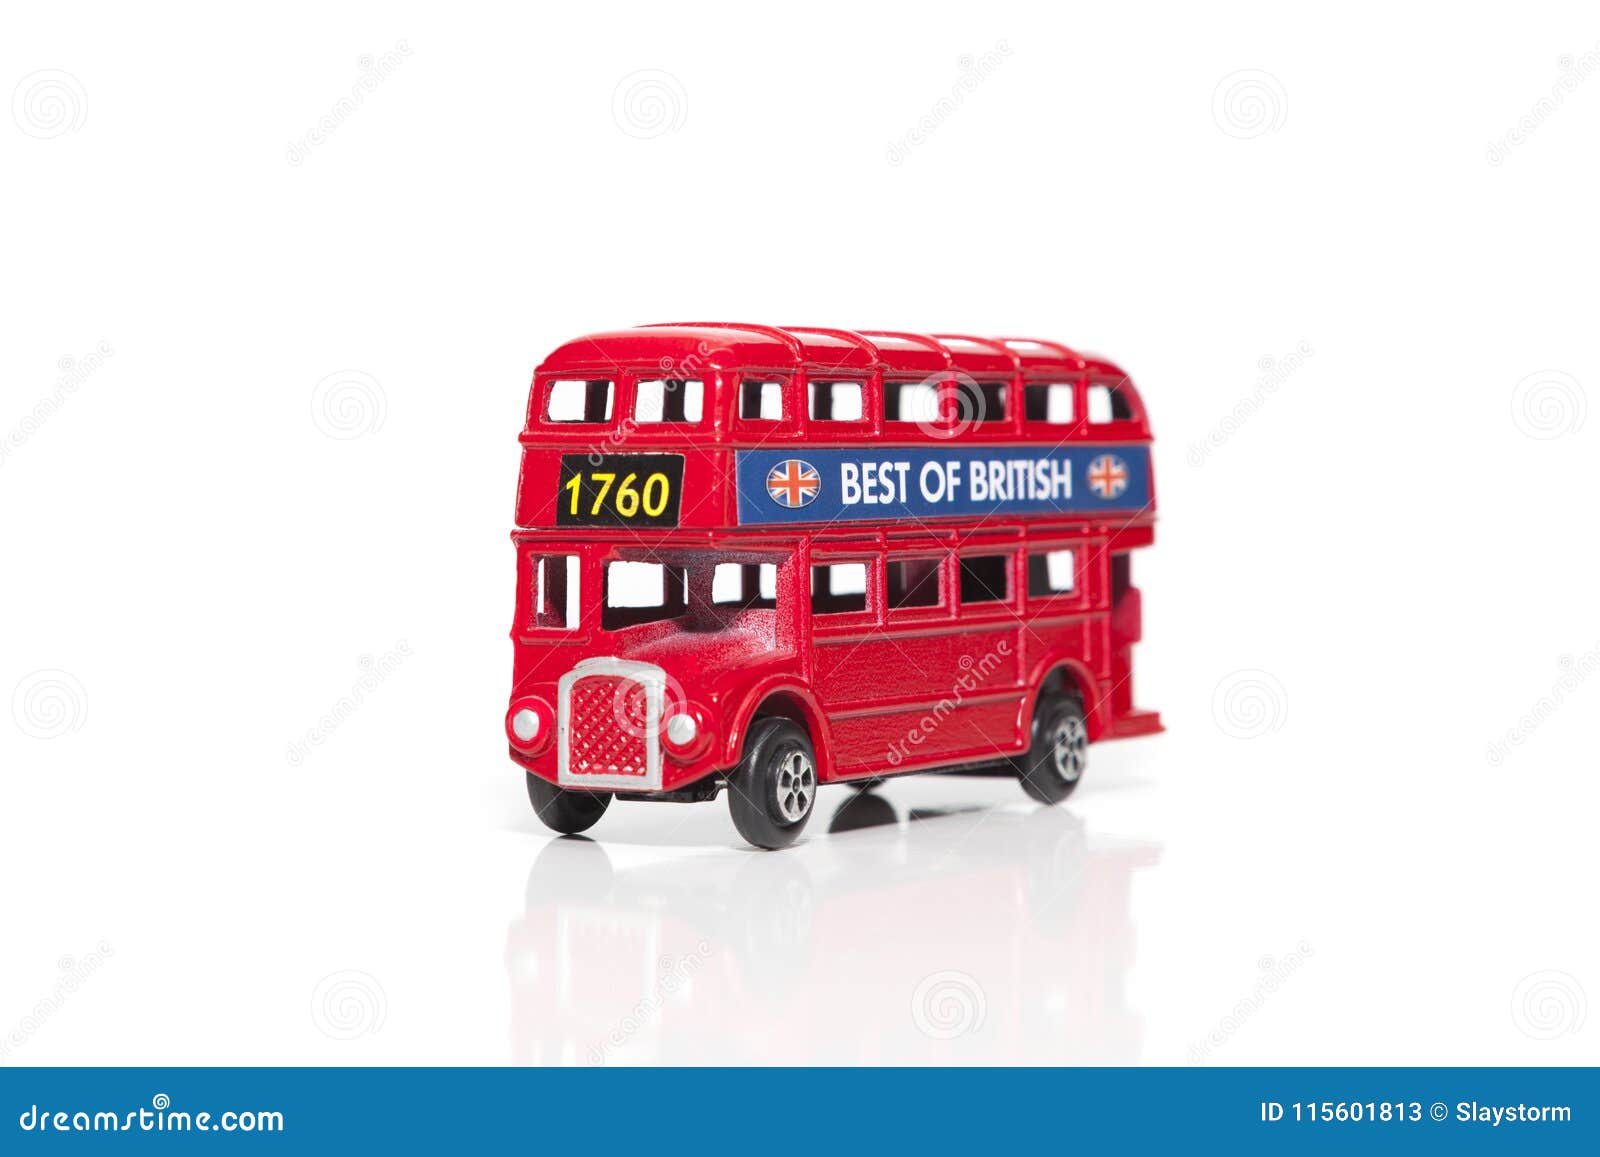 red london doubledecker bus